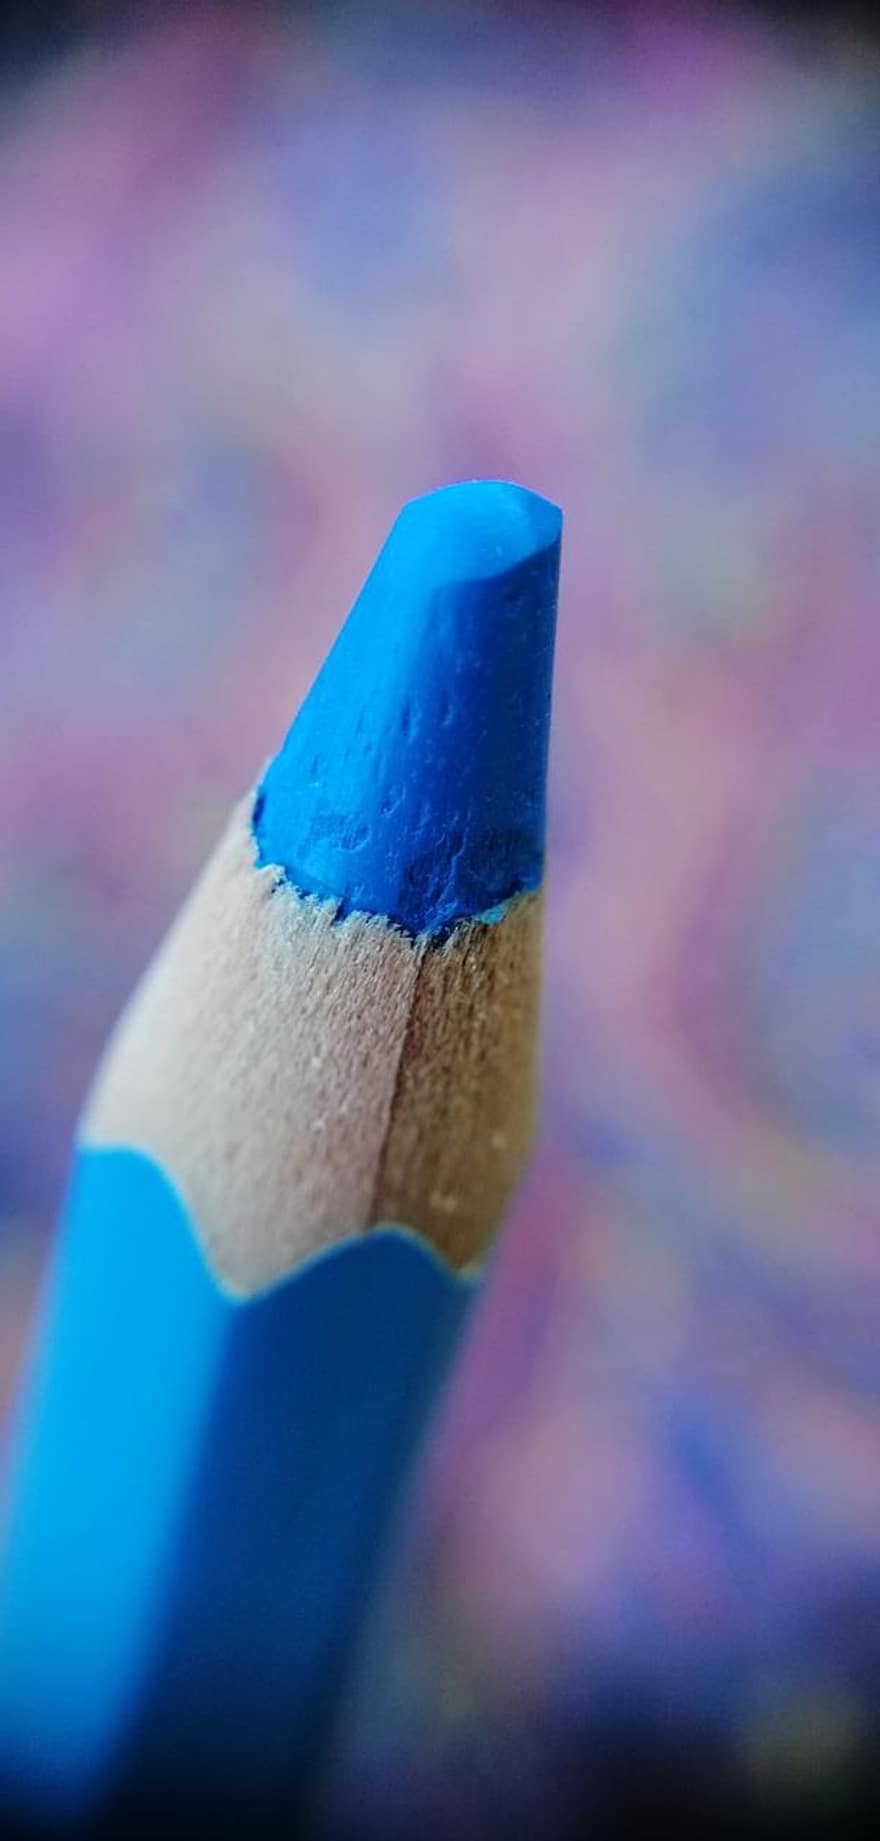 Farbstift, blauer Stift, blauer Farbstift, Blau, Kunst und Handwerk, Kunstbedarf, Farbstoff, Färbung, Makrofotografie, Bokeh